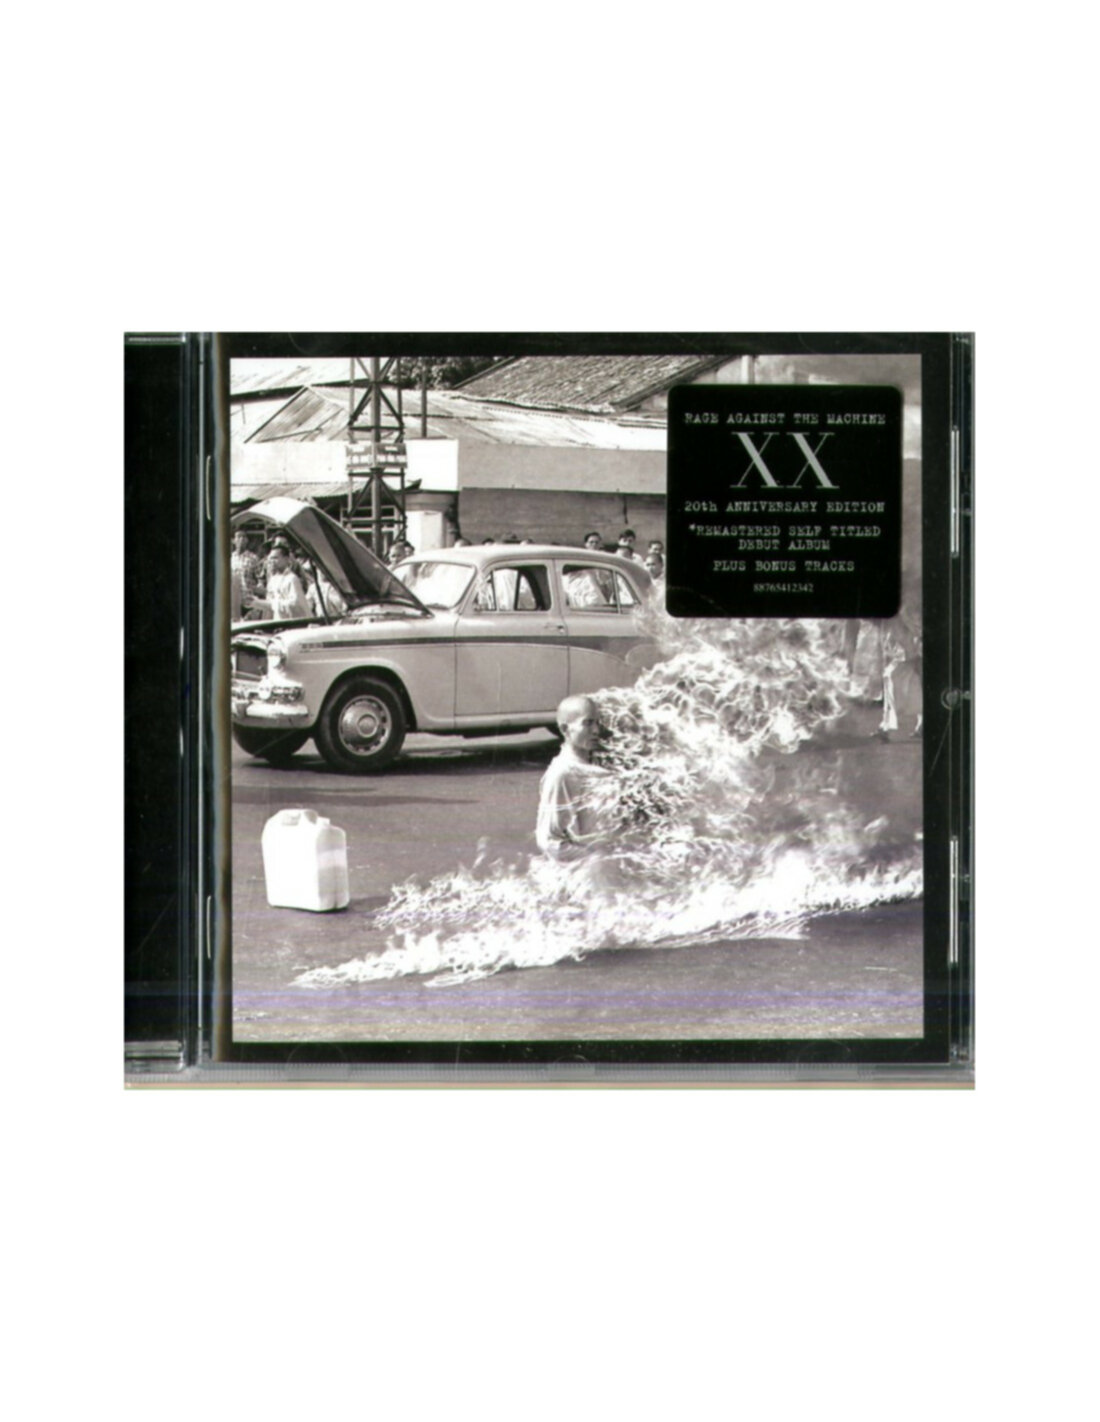 Rage Against The Machine - Rage Against The Machine (2Oth Annyversary  Edition) - (CD) only €9.99 CD buy online